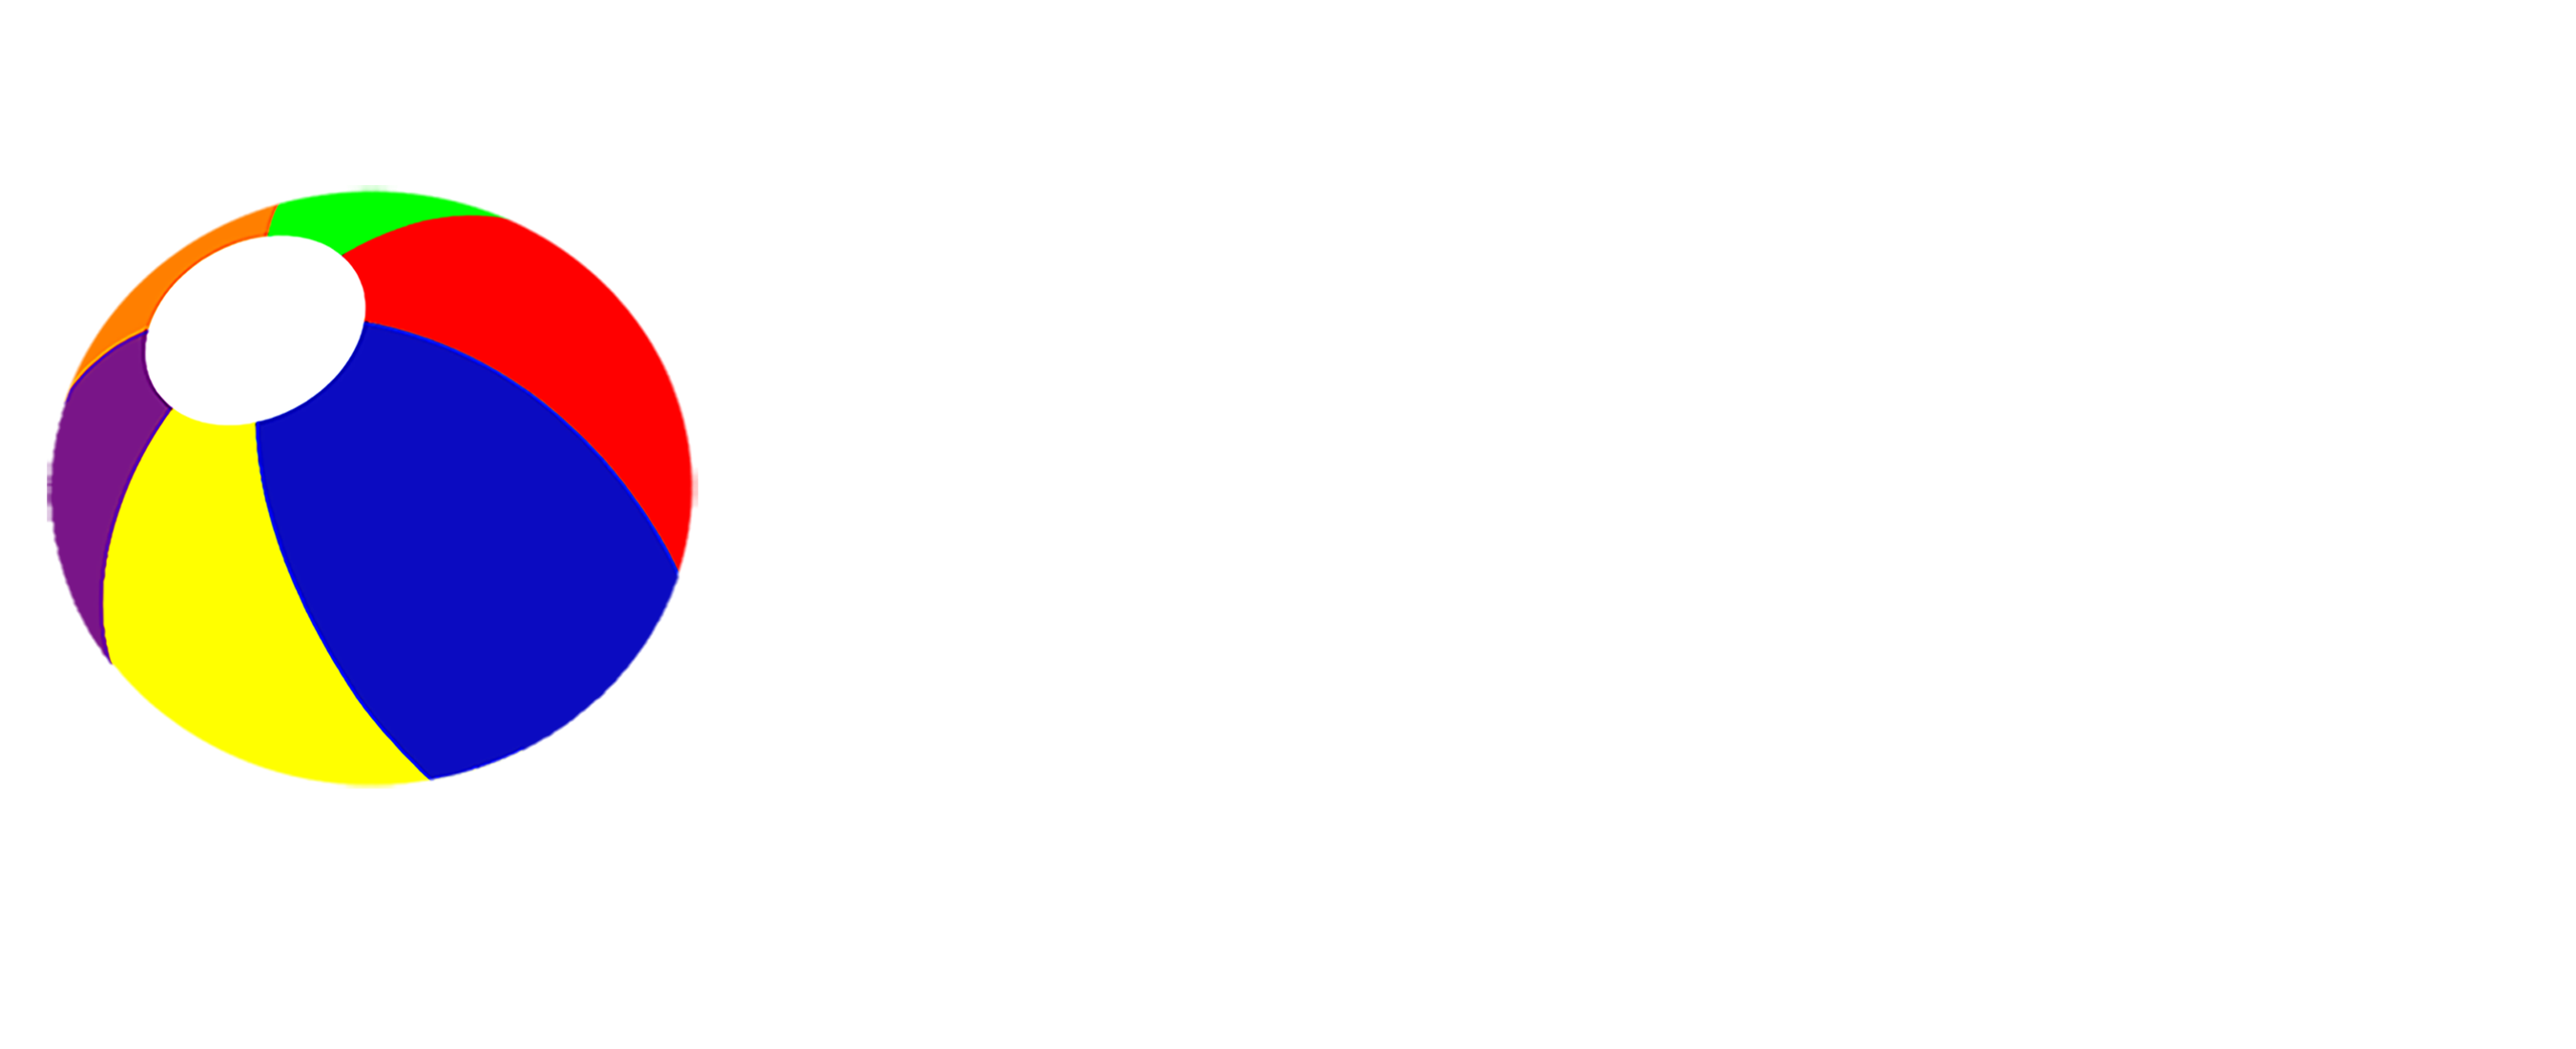 Grand Lagoon Media